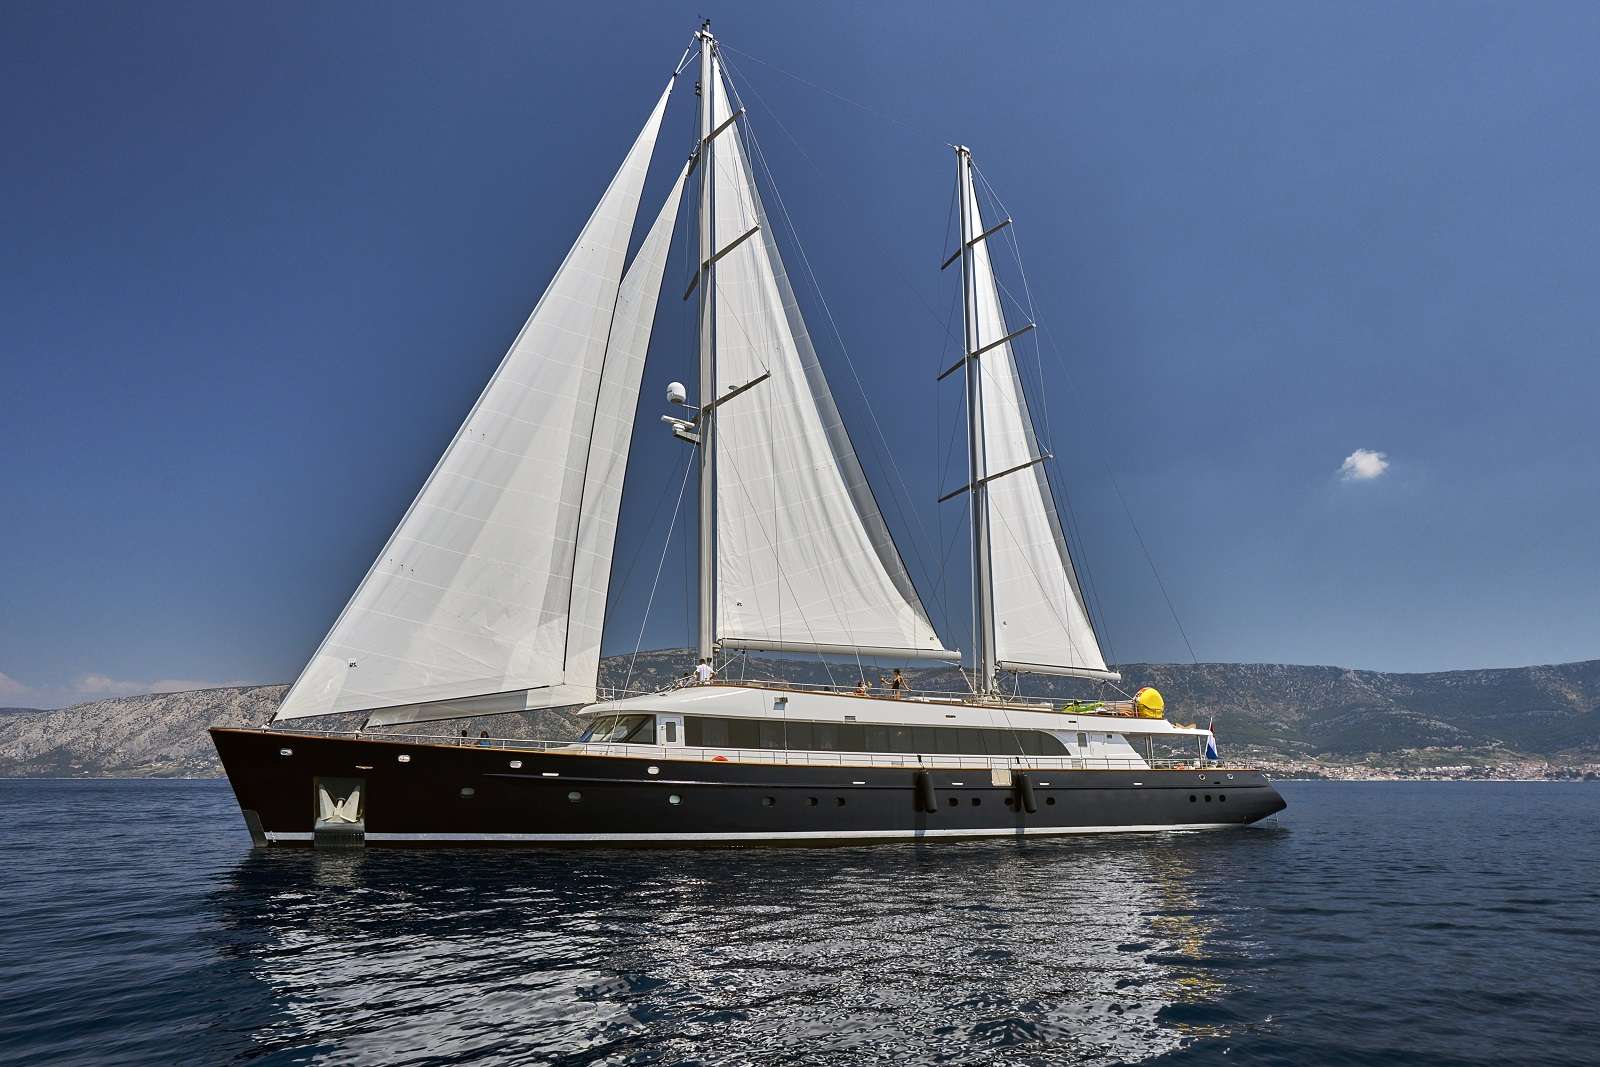 Motor Sailing Yacht 'DALMATINO', 12 PAX, 8 Crew, 142.00 Ft, 43.00 Meters, Built 2019, Custom